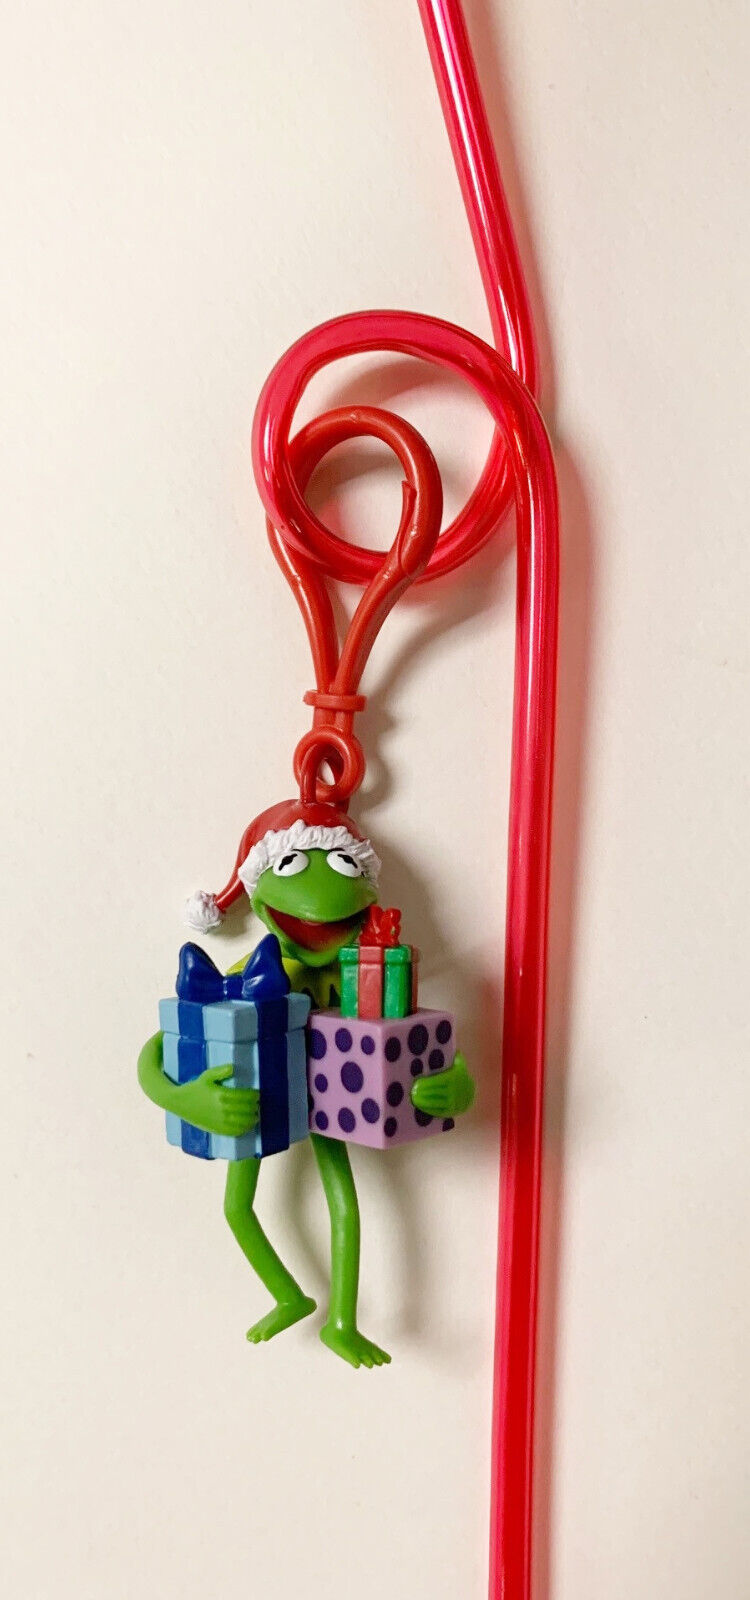 New Holiday Kermit Straw Clip at Disneyland - Disneyland News Today